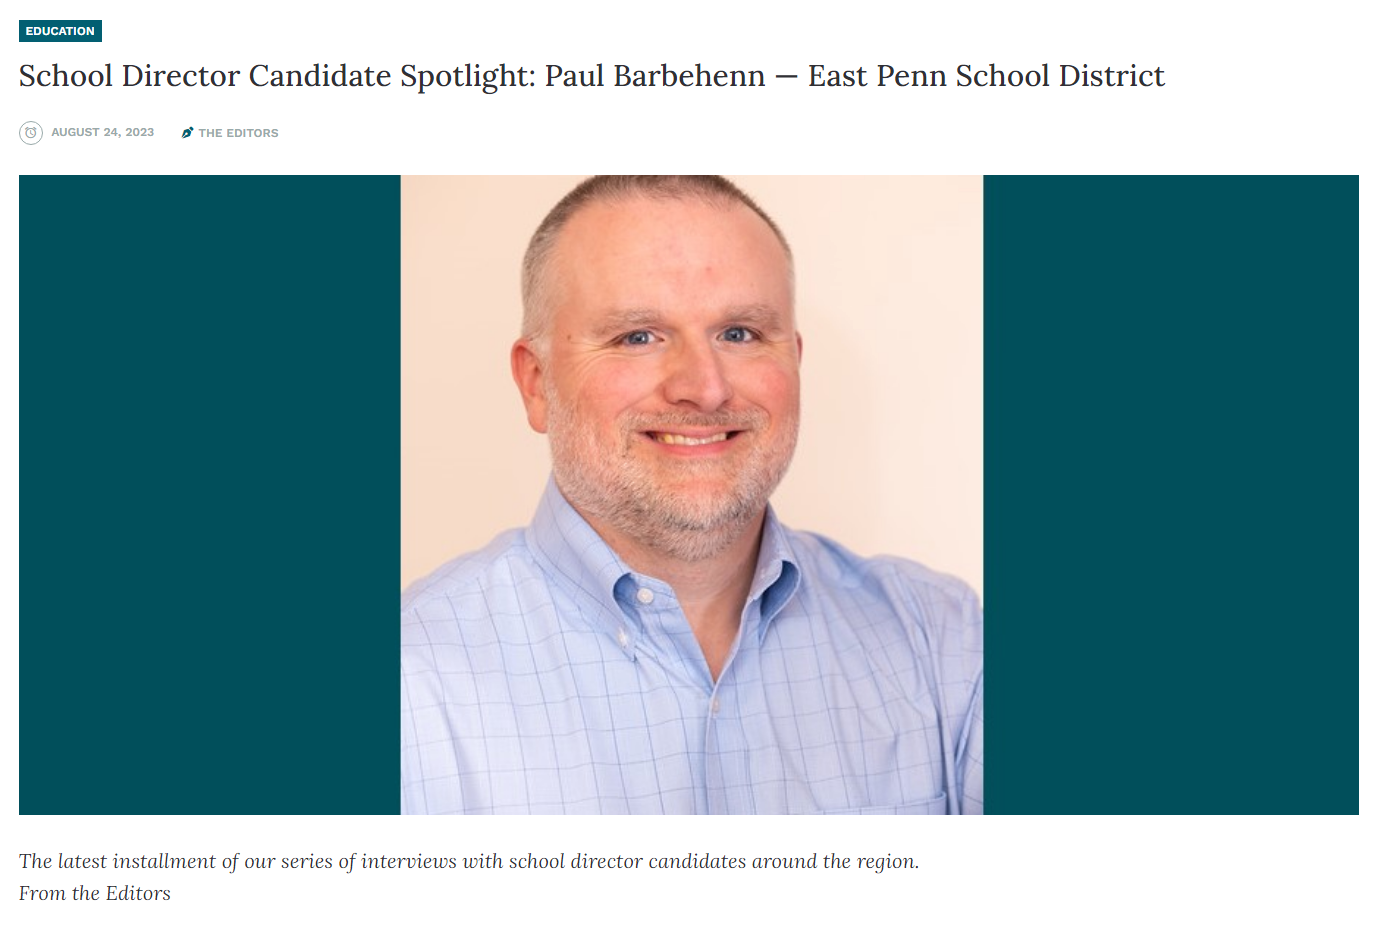 School Director Candidate Spotlight: Paul Barbehenn - East Penn School District